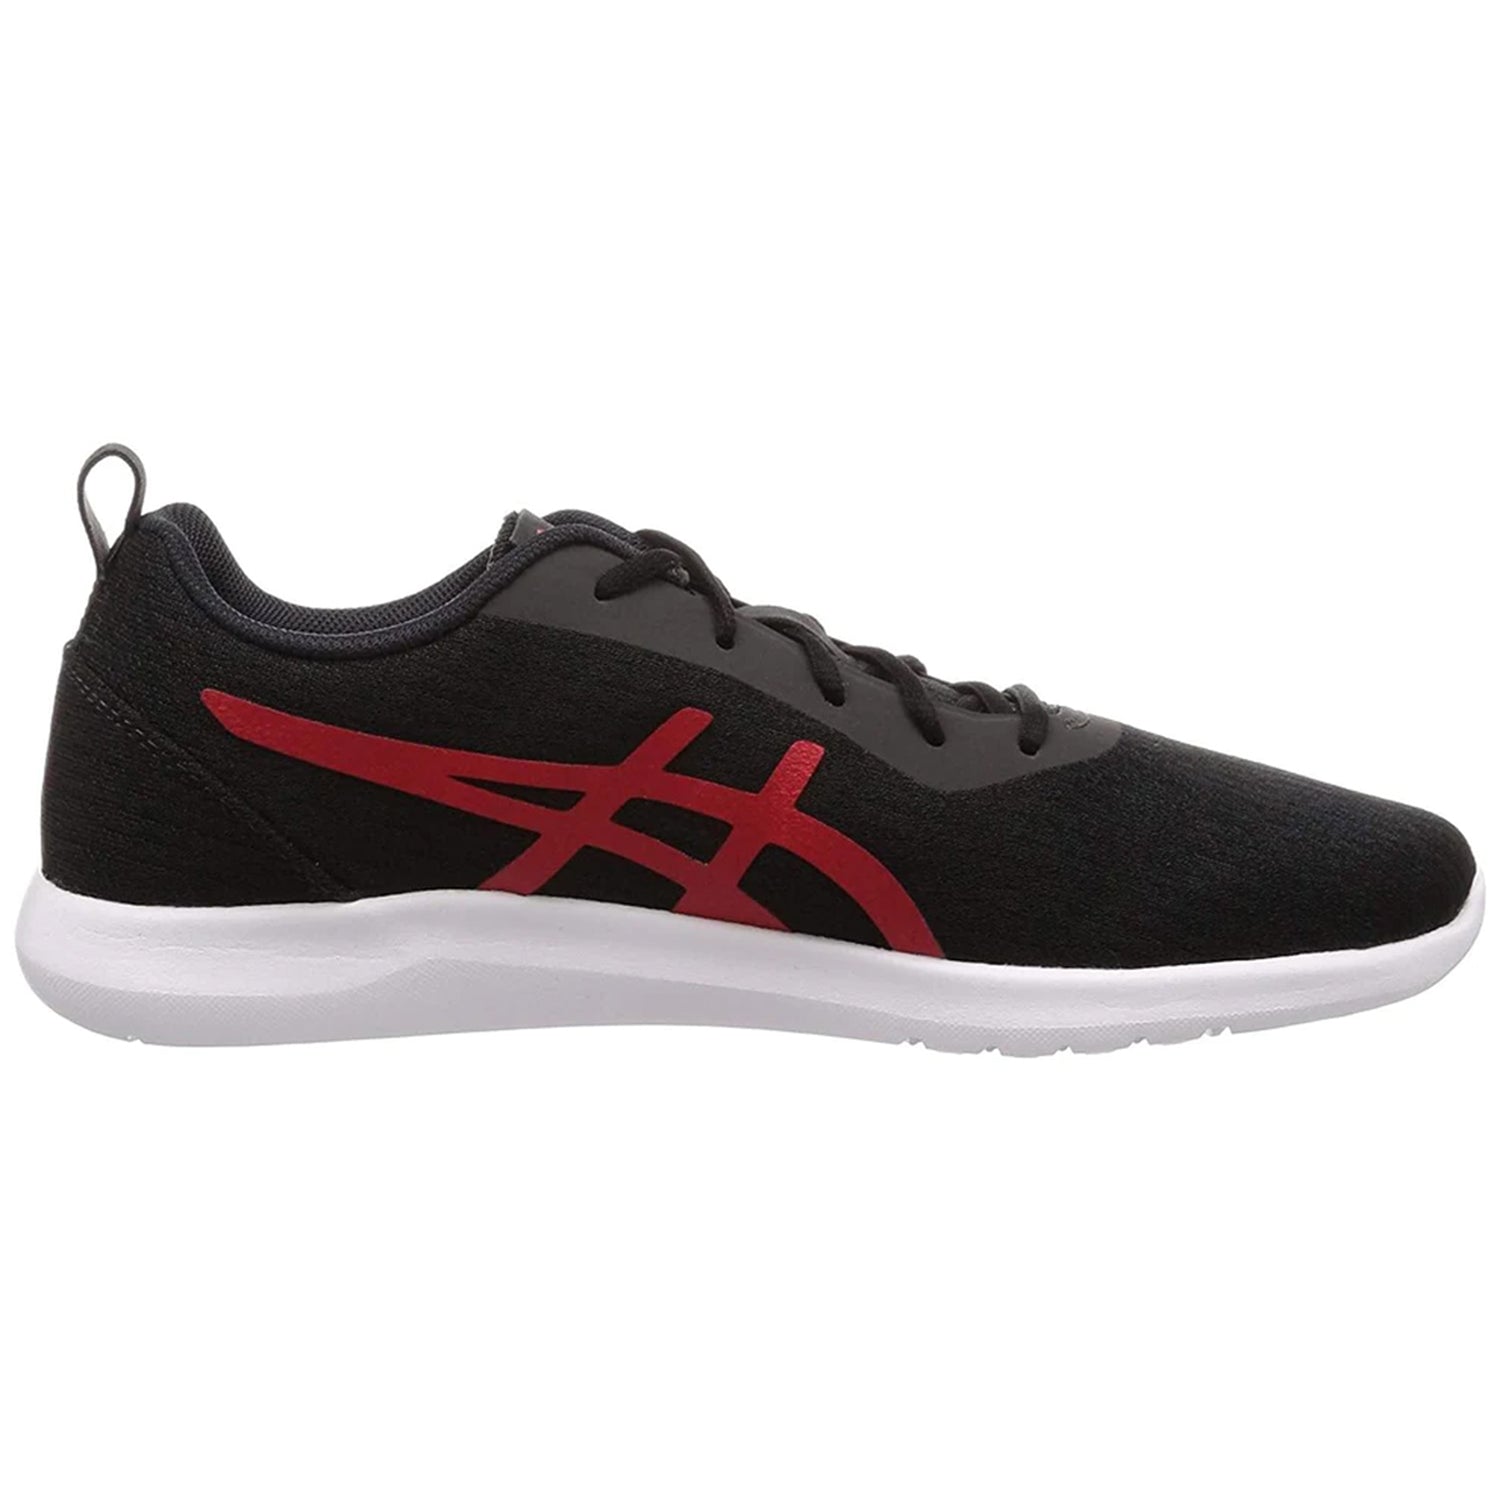 Asics Kanmei 2 Men's Running Shoes Black/ Speed Red - Best Price online Prokicksports.com